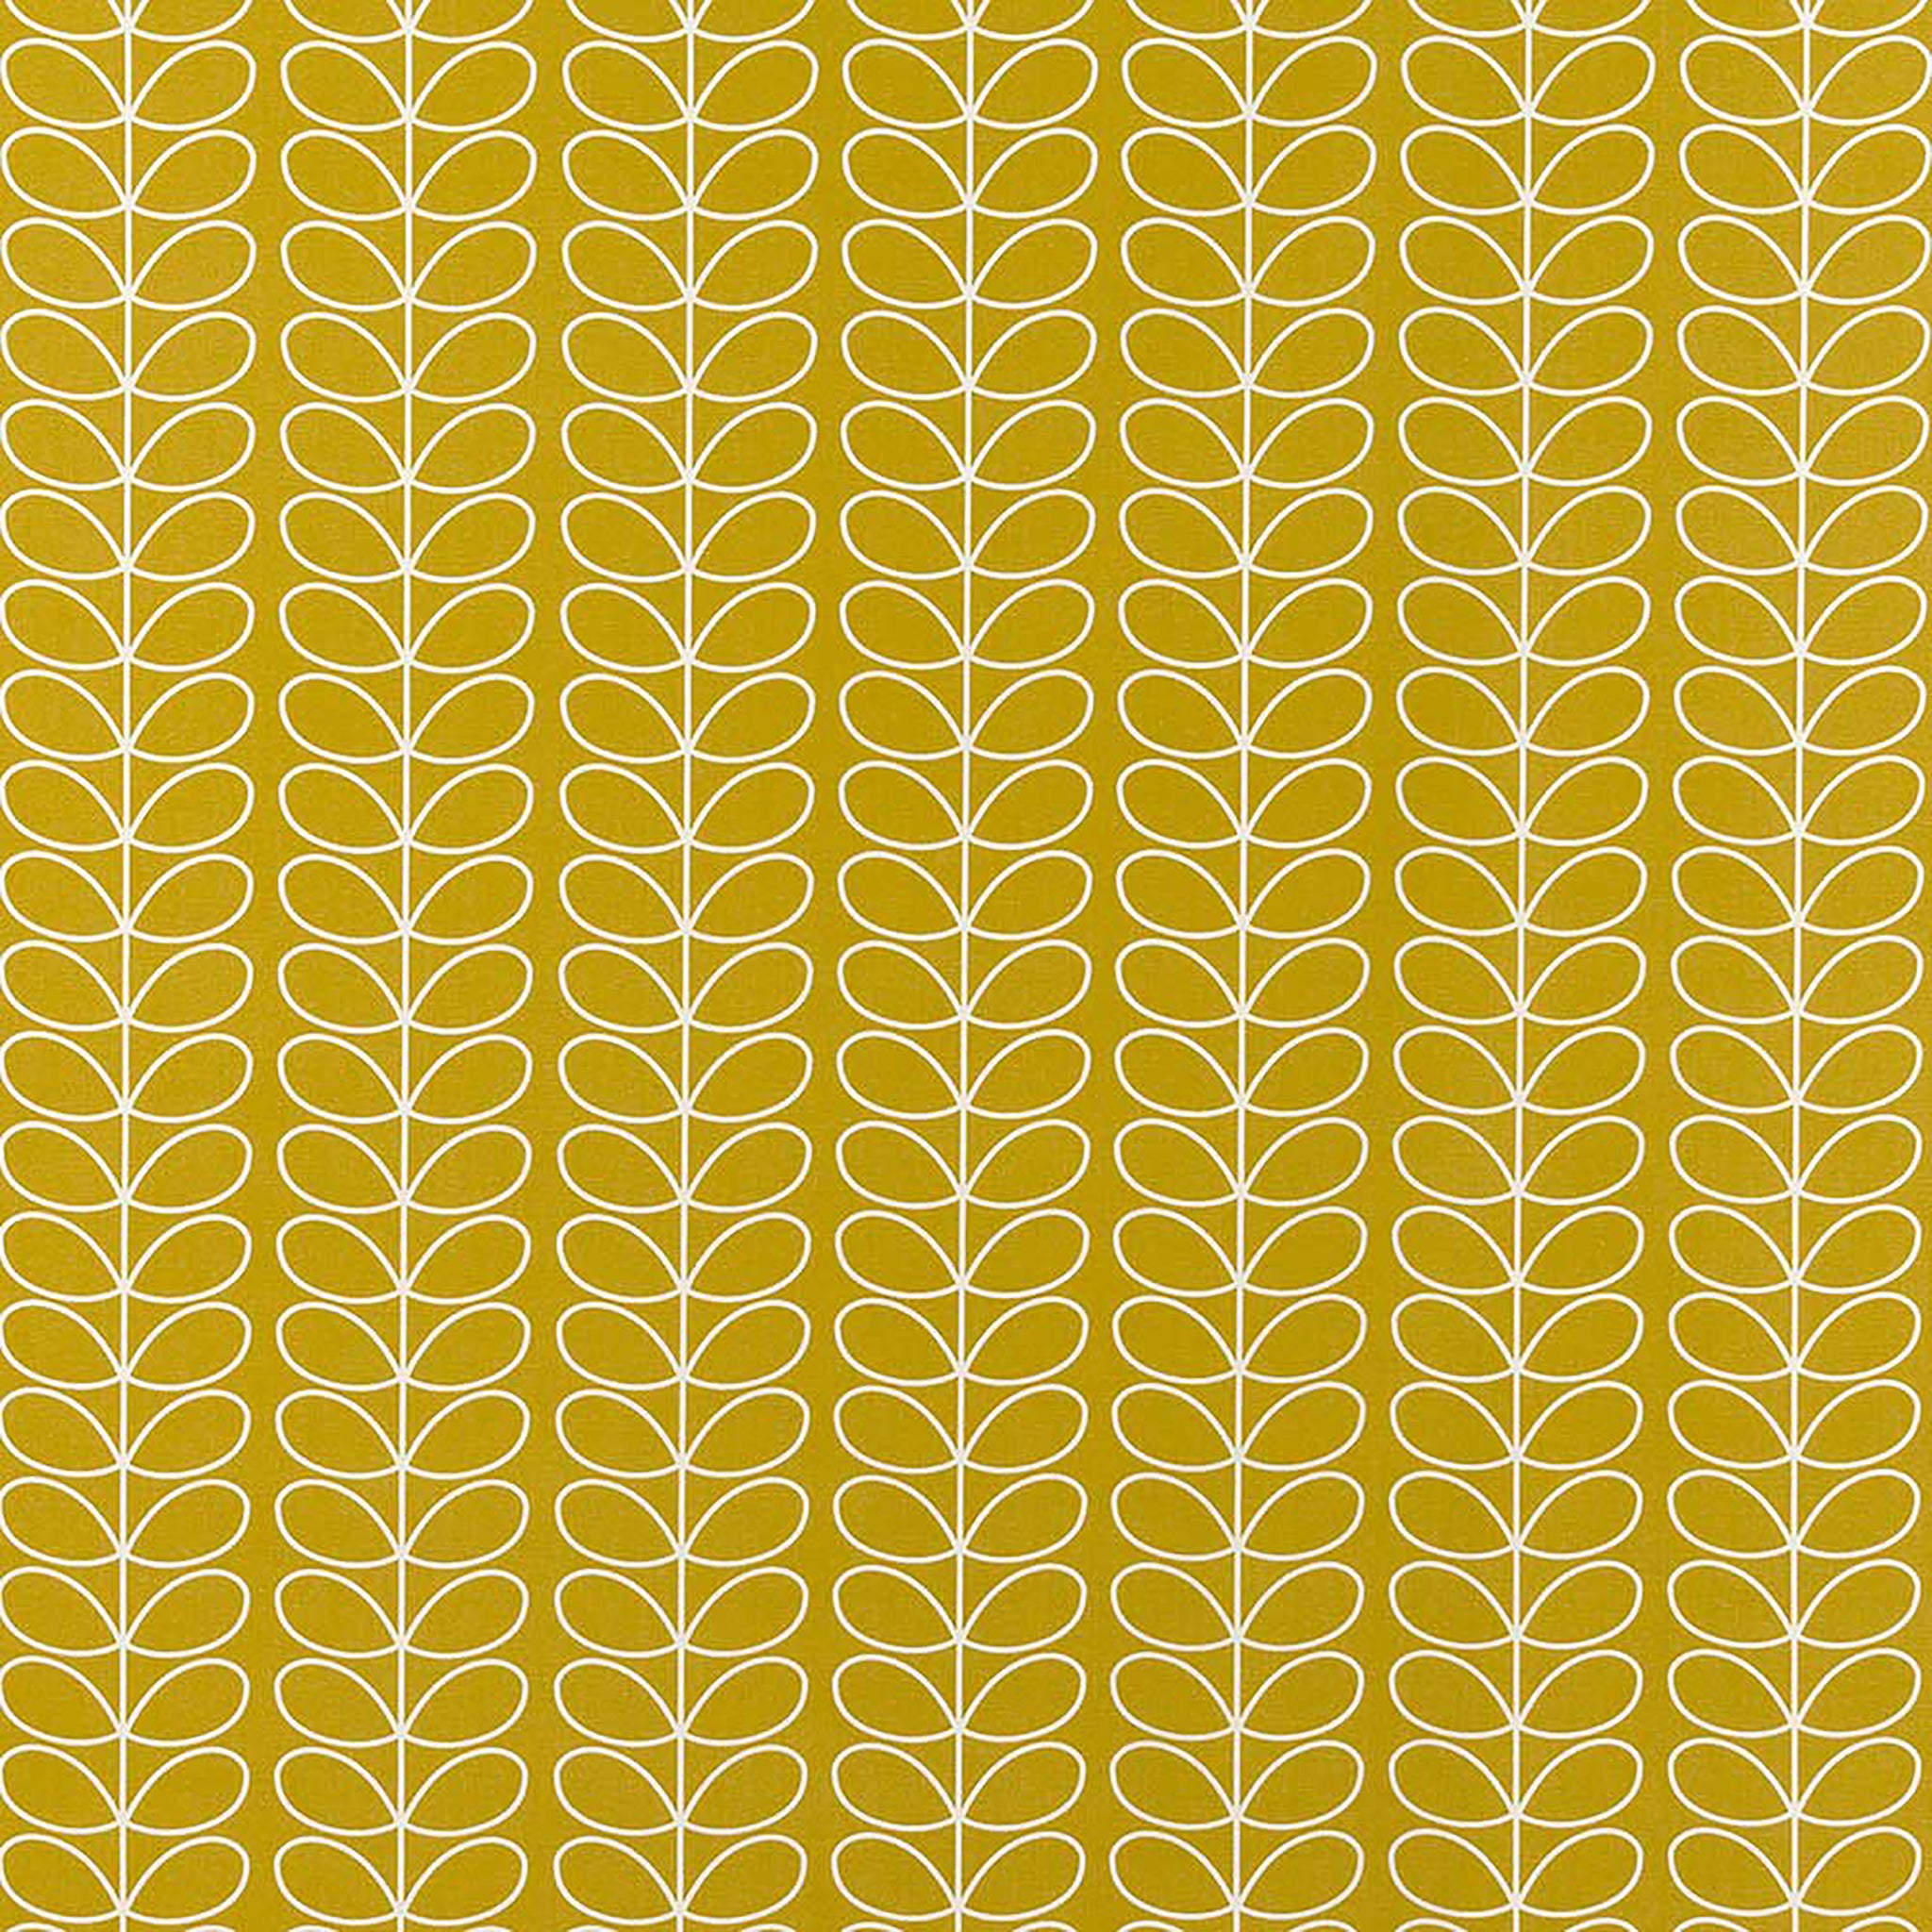 Linear Stem, Dandelion. Fabric by Orla Kiely